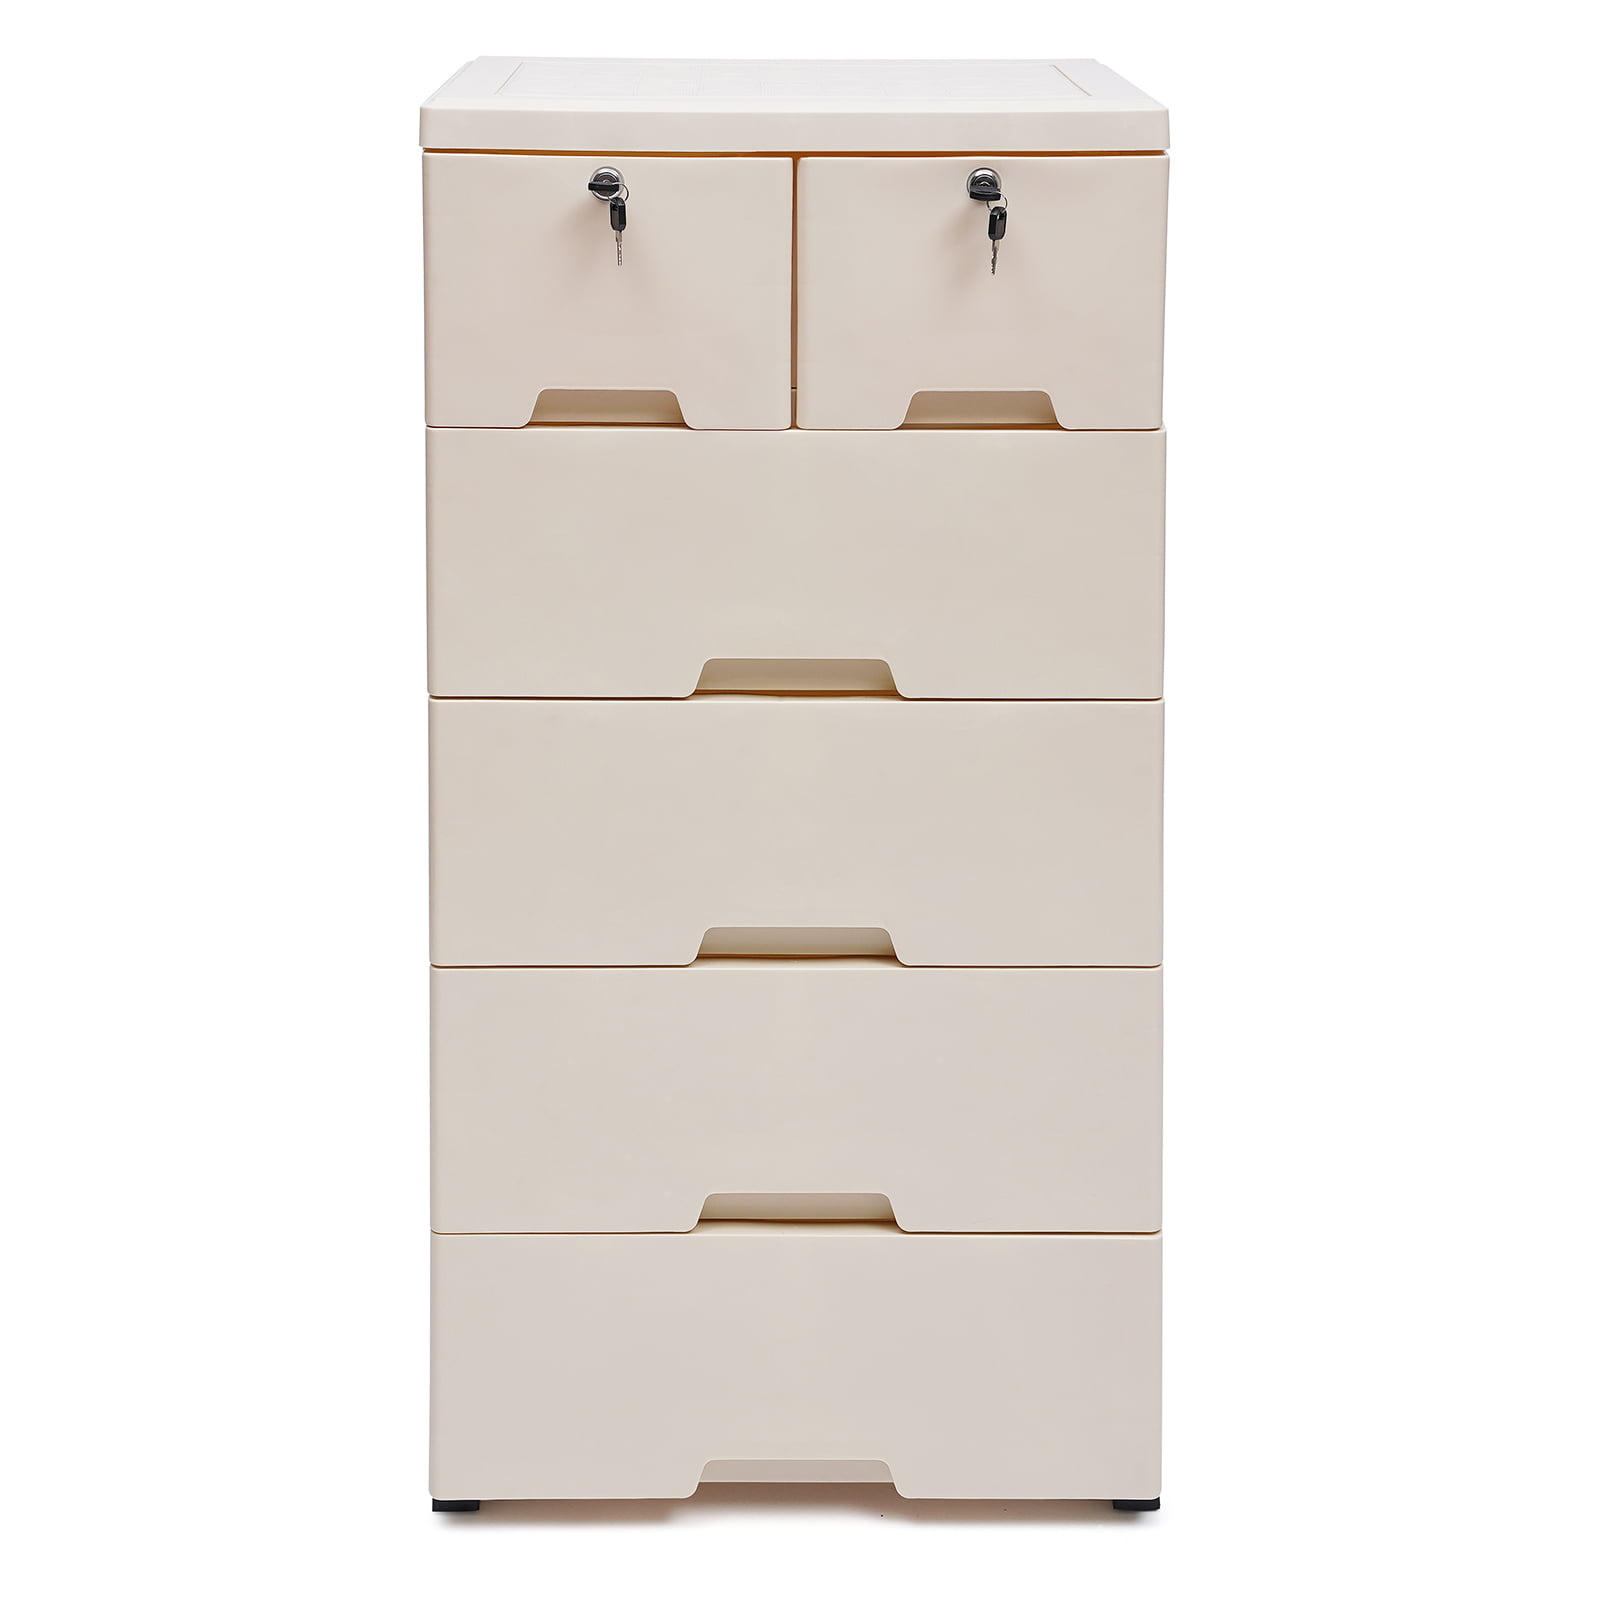 Plastic Storage Dresser 6 Drawers Clothes Organizer Tower Cabinet